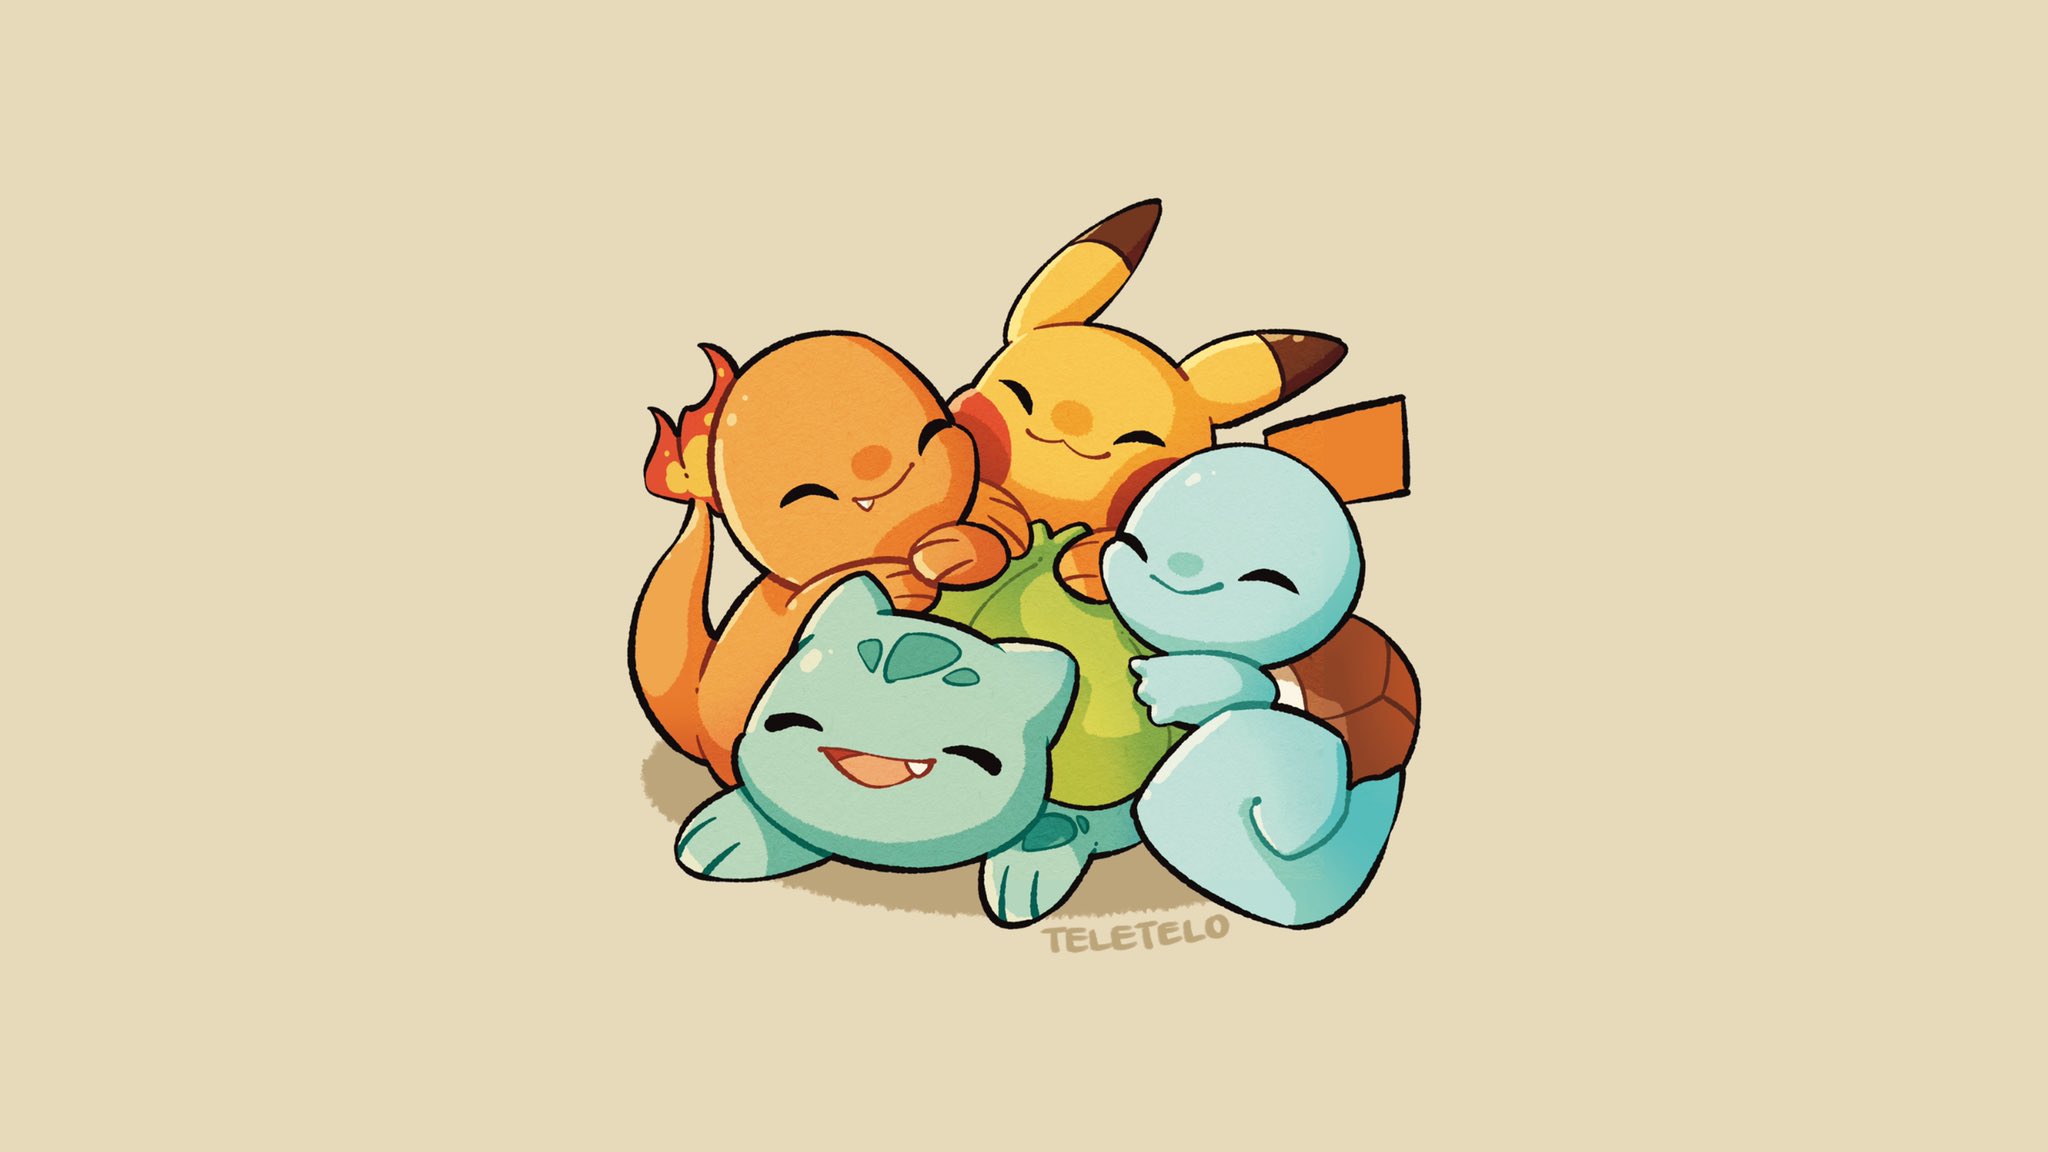 pikachu, bulbasaur, squirtle, and charmander (pokemon) drawn